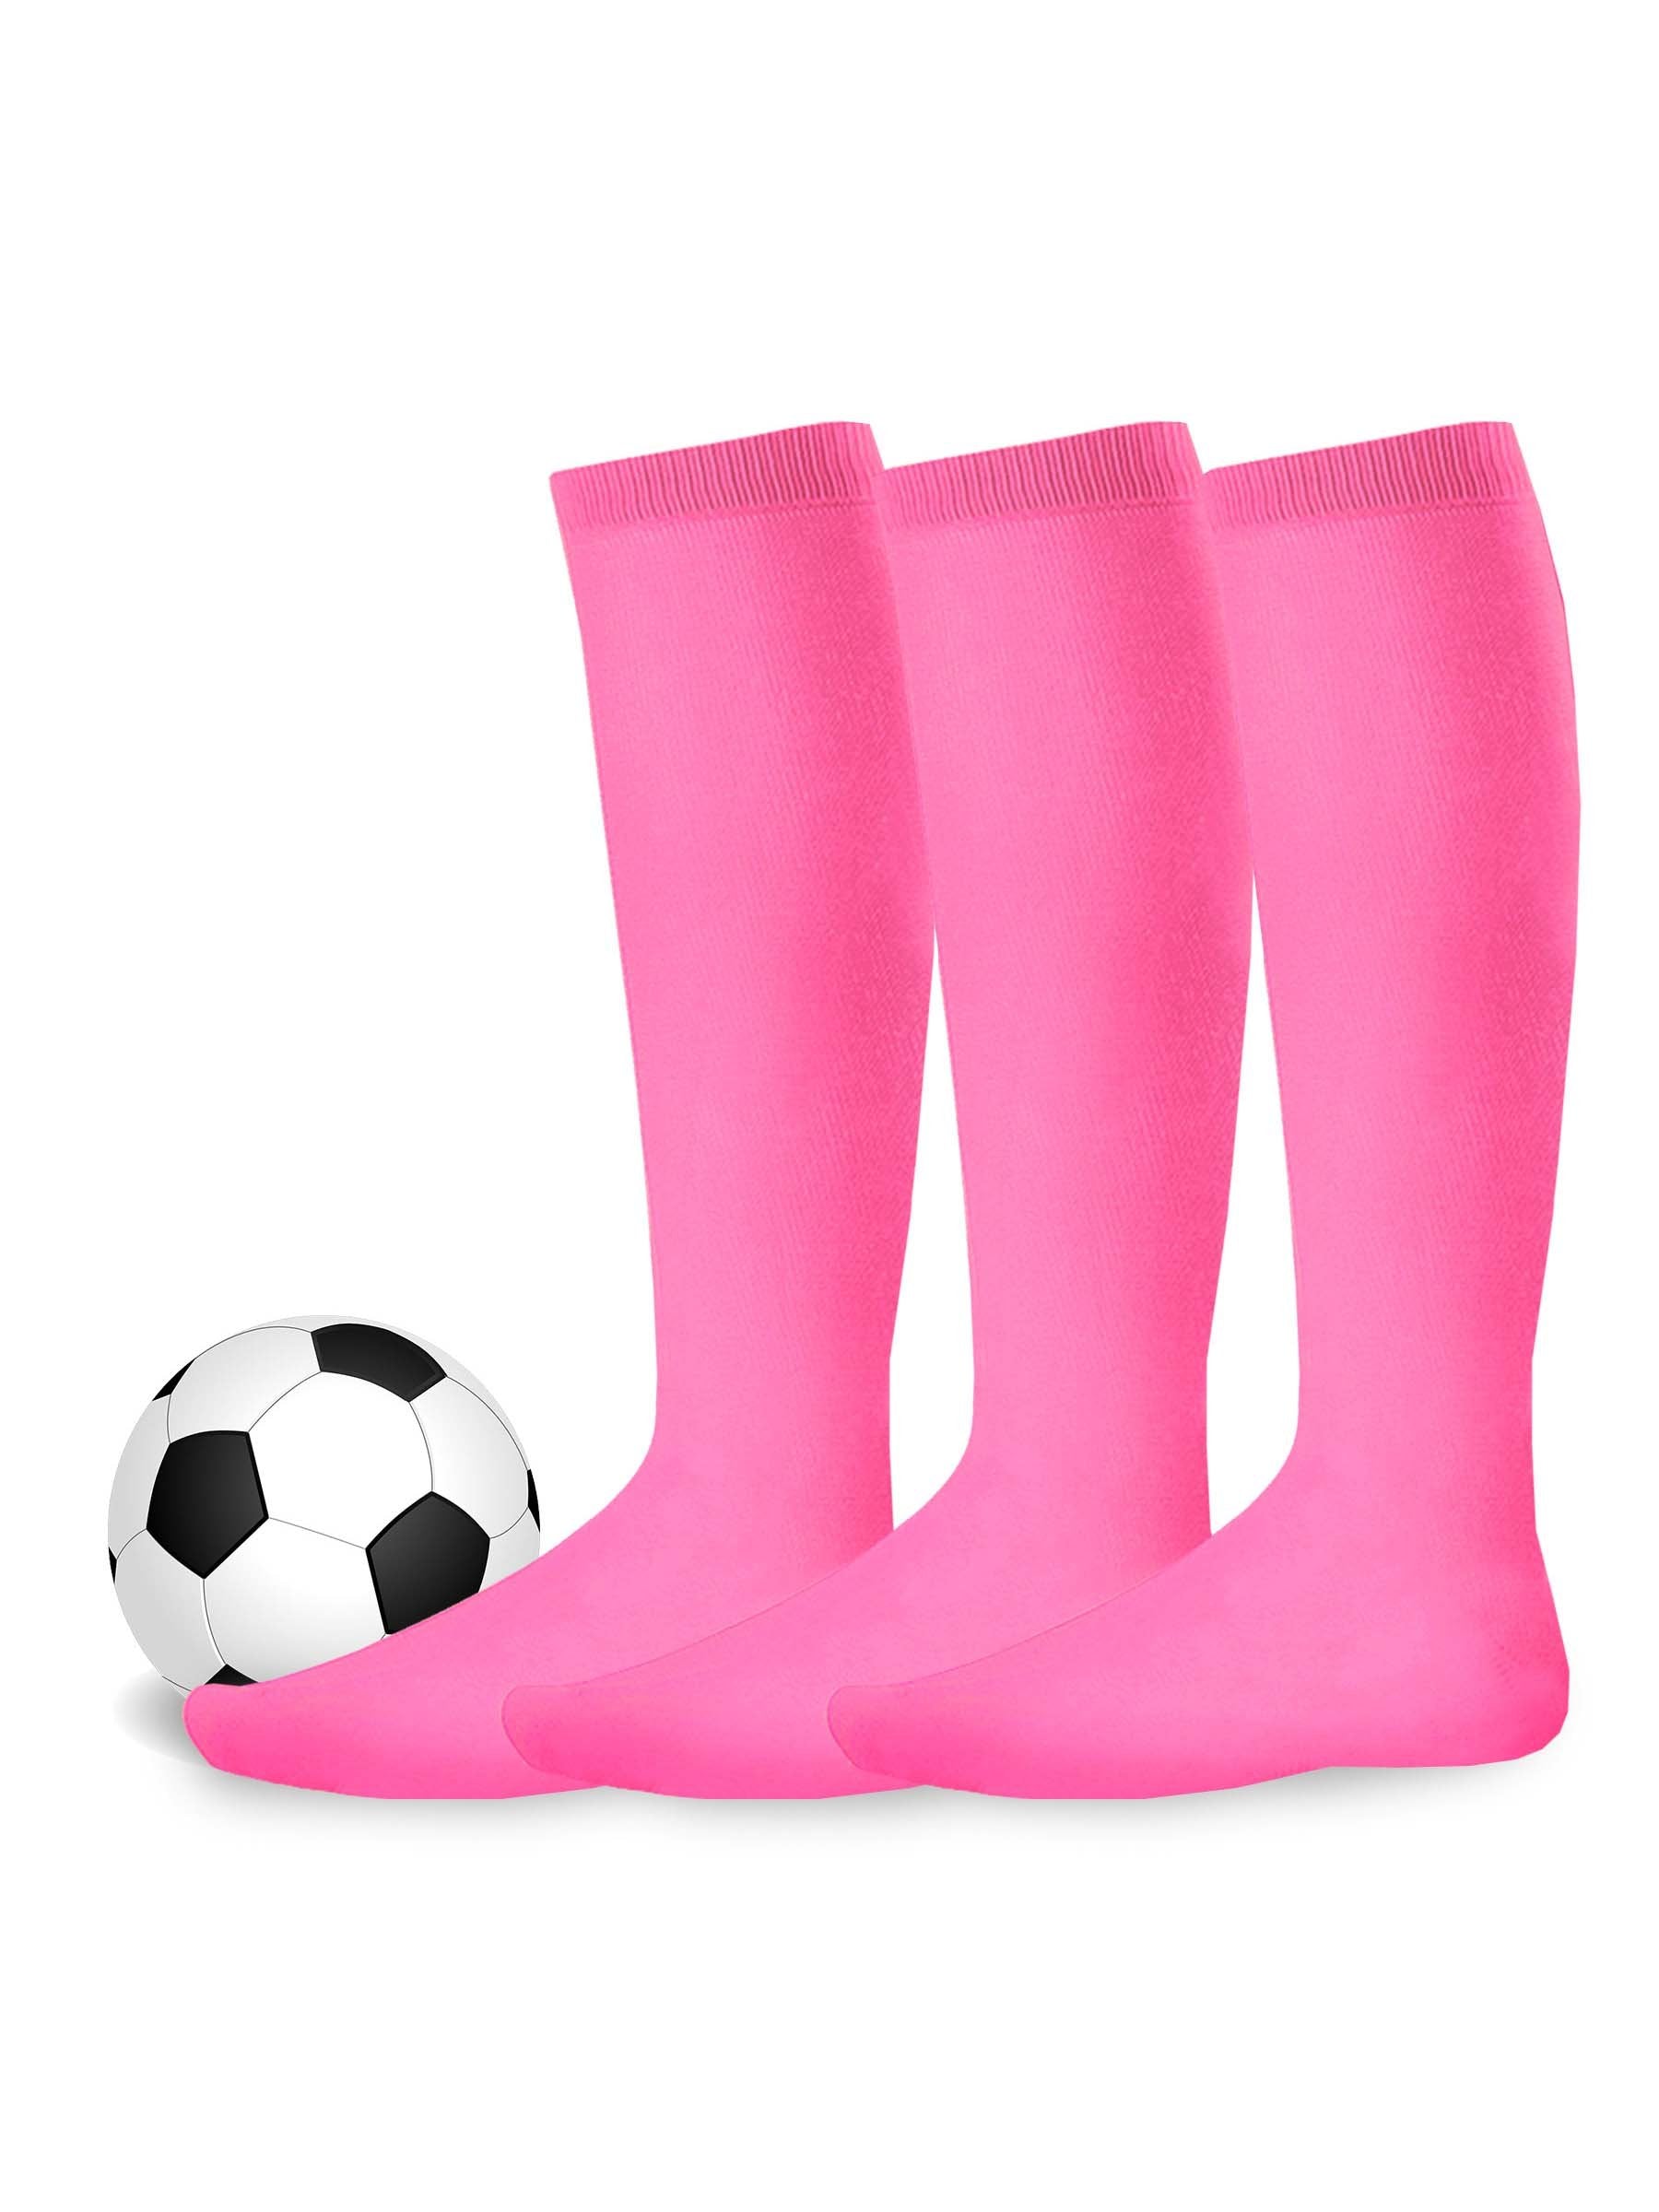 CWVLC Soccer Socks 1/3/5 pairs Team Sport Knee High Socks for Adult Youth Kids 